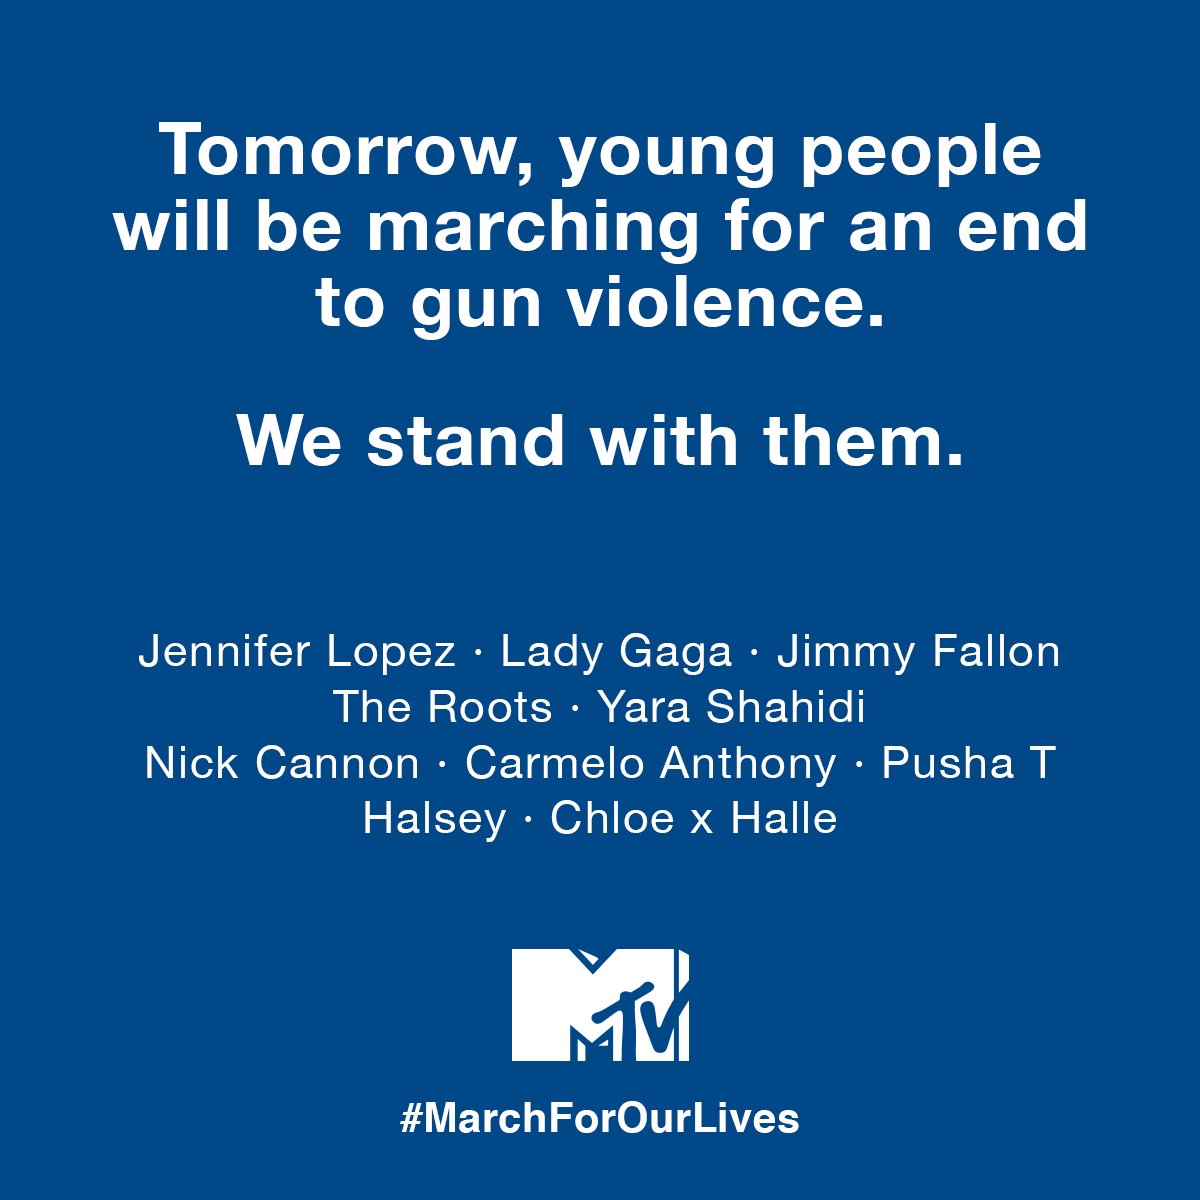 TOMORROW #MarchForOurLives https://t.co/xLi9X9qOdy